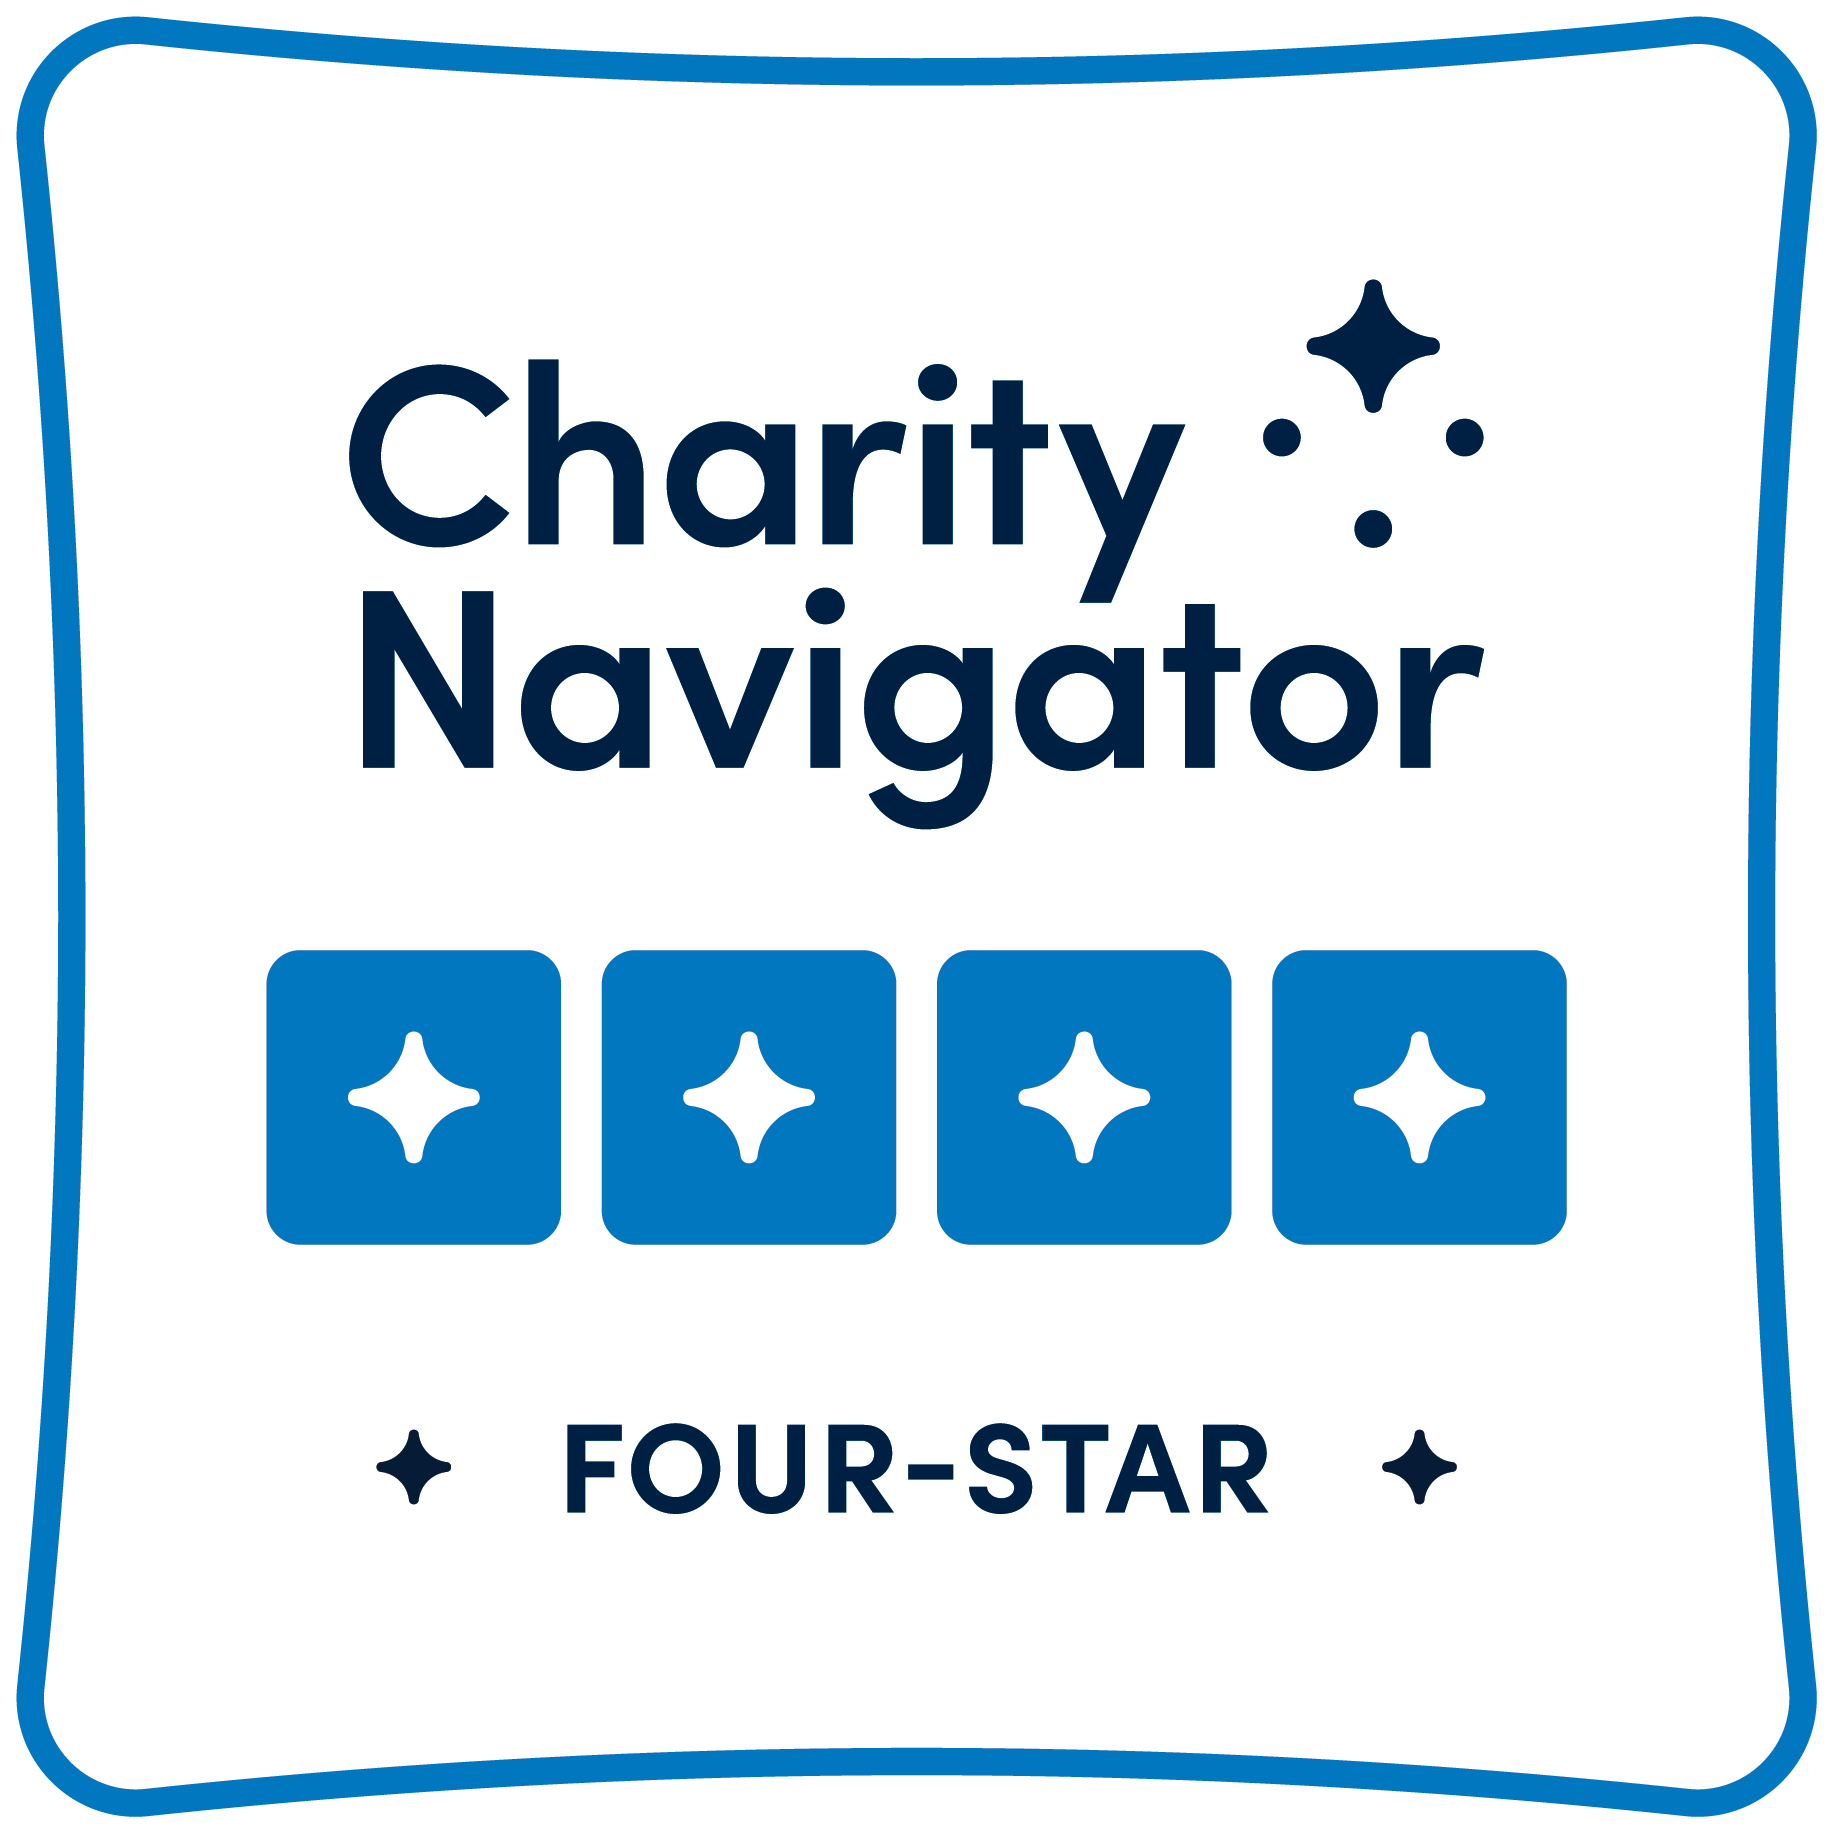 Charity Navigator: Four-Star